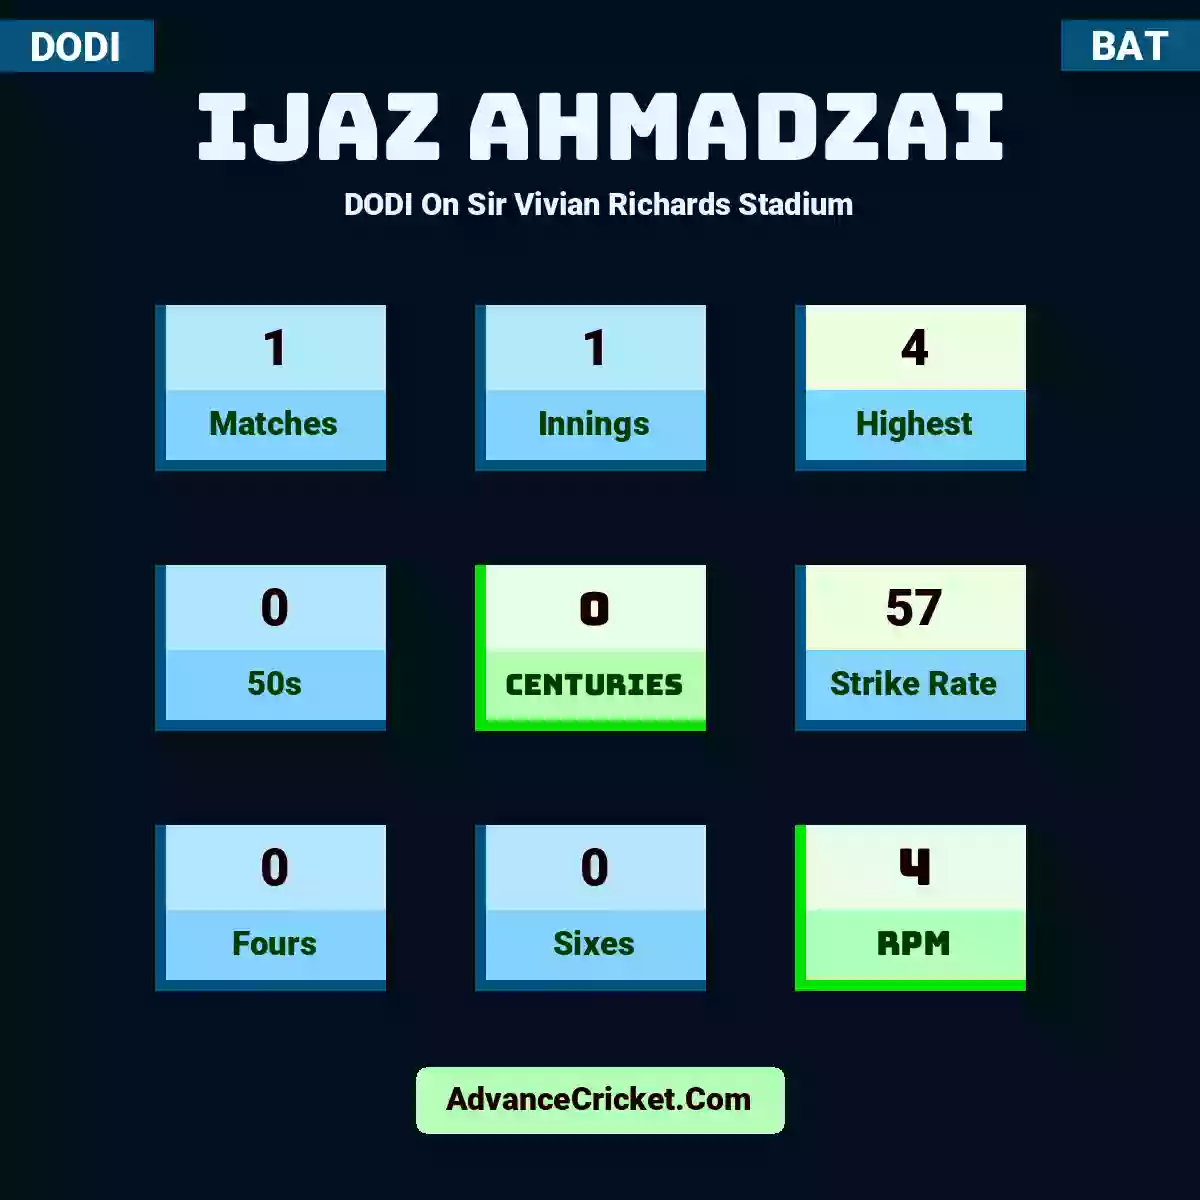 Ijaz Ahmadzai DODI  On Sir Vivian Richards Stadium, Ijaz Ahmadzai played 1 matches, scored 4 runs as highest, 0 half-centuries, and 0 centuries, with a strike rate of 57. I.Ahmadzai hit 0 fours and 0 sixes, with an RPM of 4.